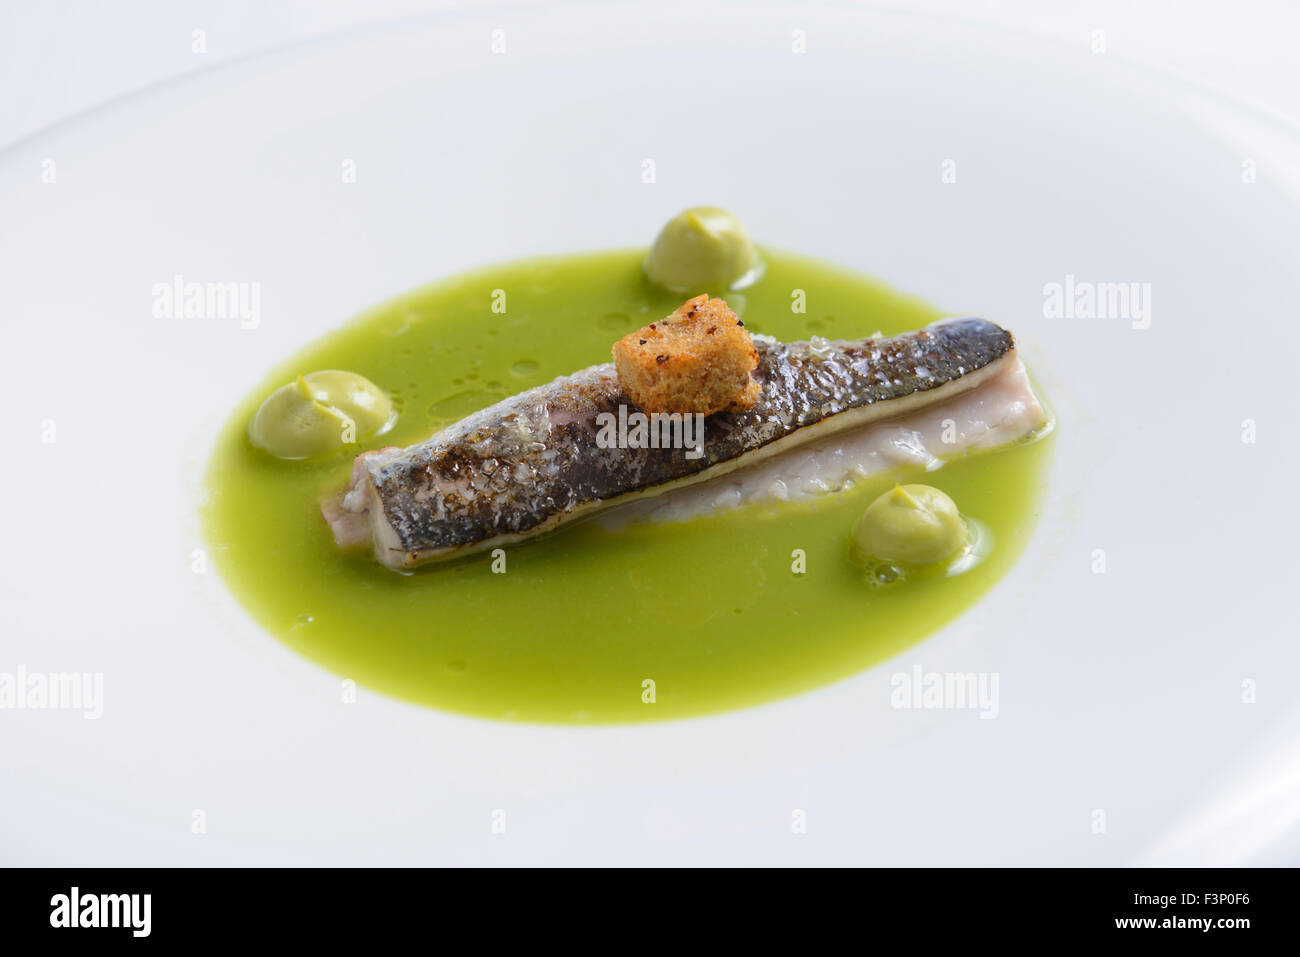 Nouvelle cuisine gourmet sardine fish dish Stock Photo